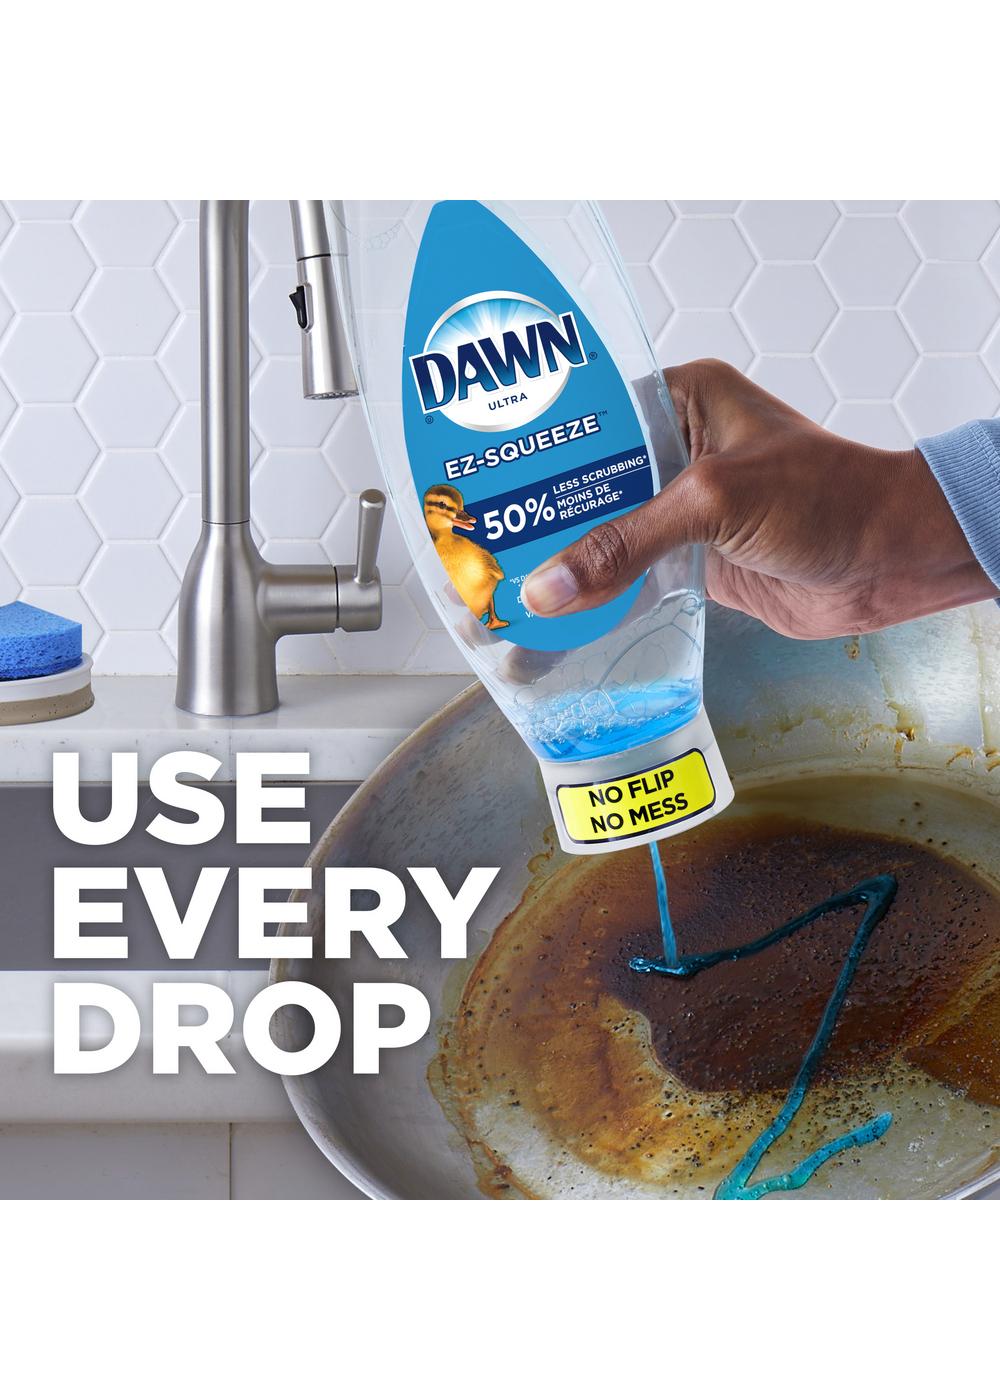 Dawn Ultra Original Scent Ez-Squeeze Liquid Dish Soap; image 8 of 8